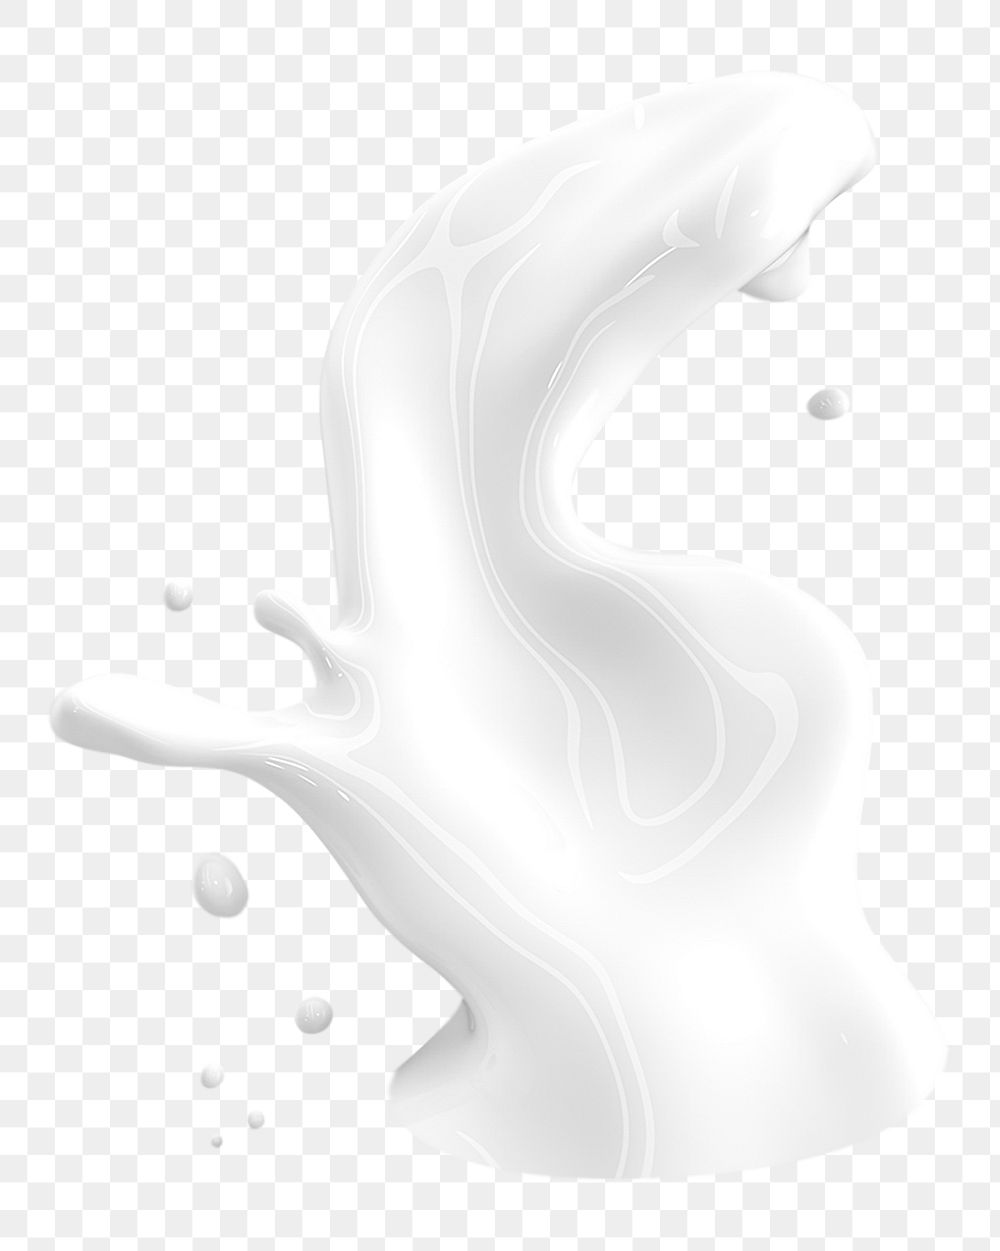 Milk splash png sticker, transparent background